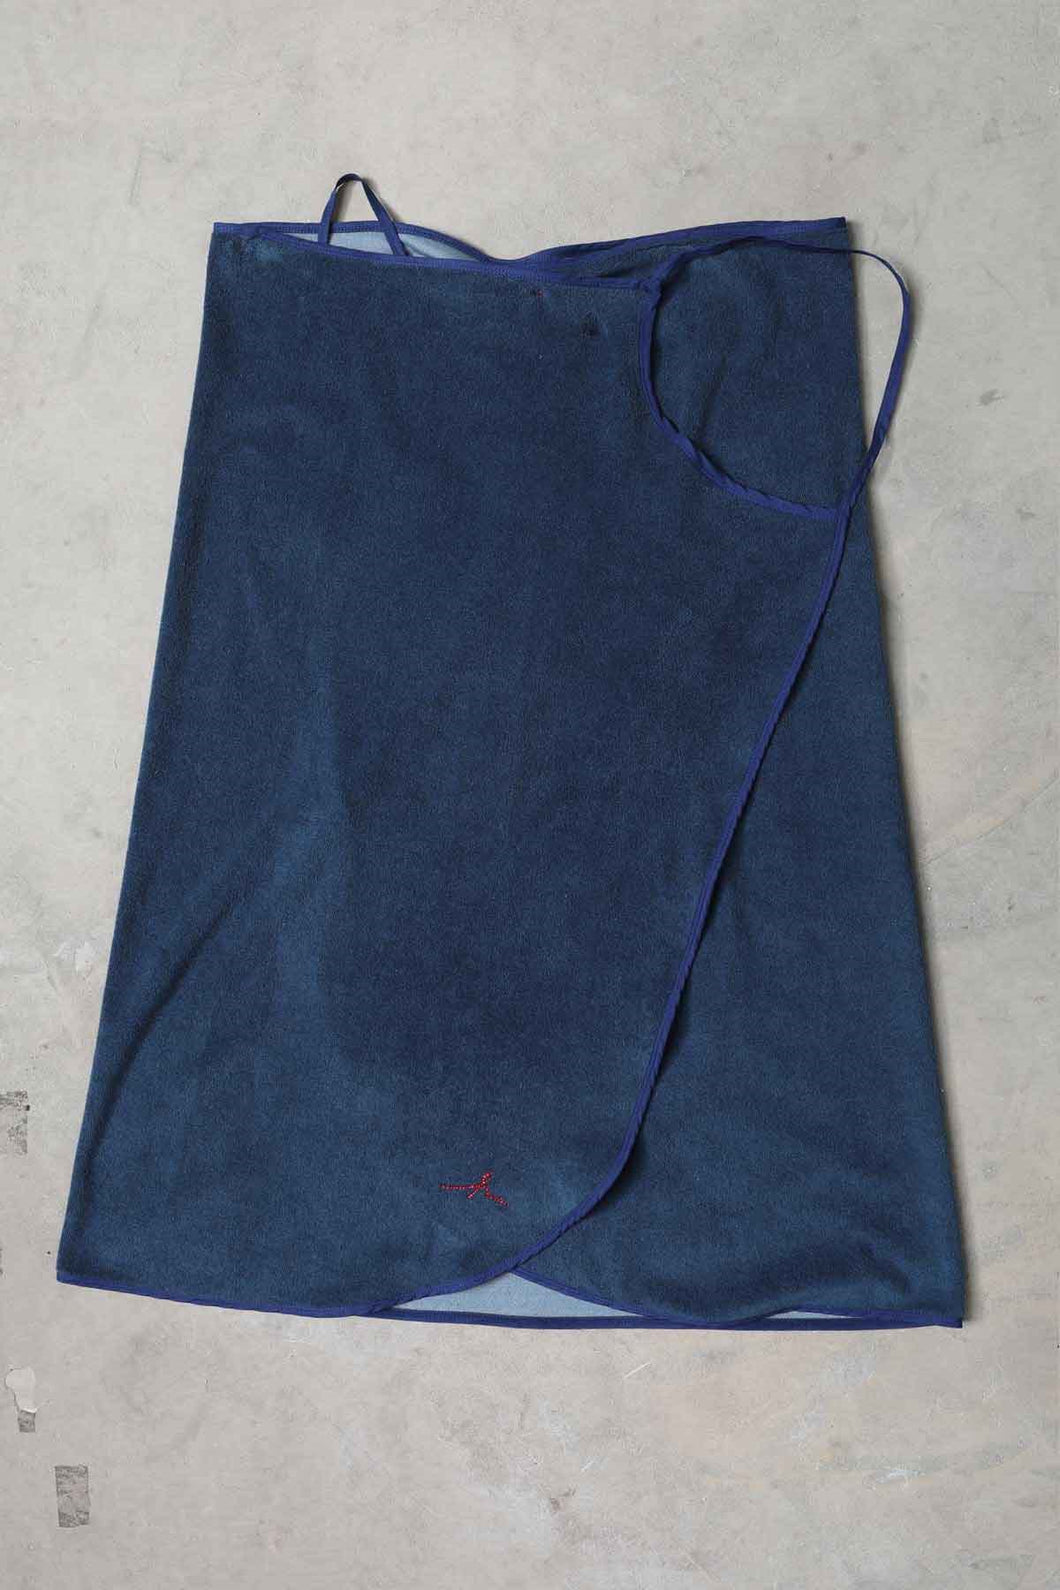 Women's Strappy Navy Blue Beach Robe / Towel